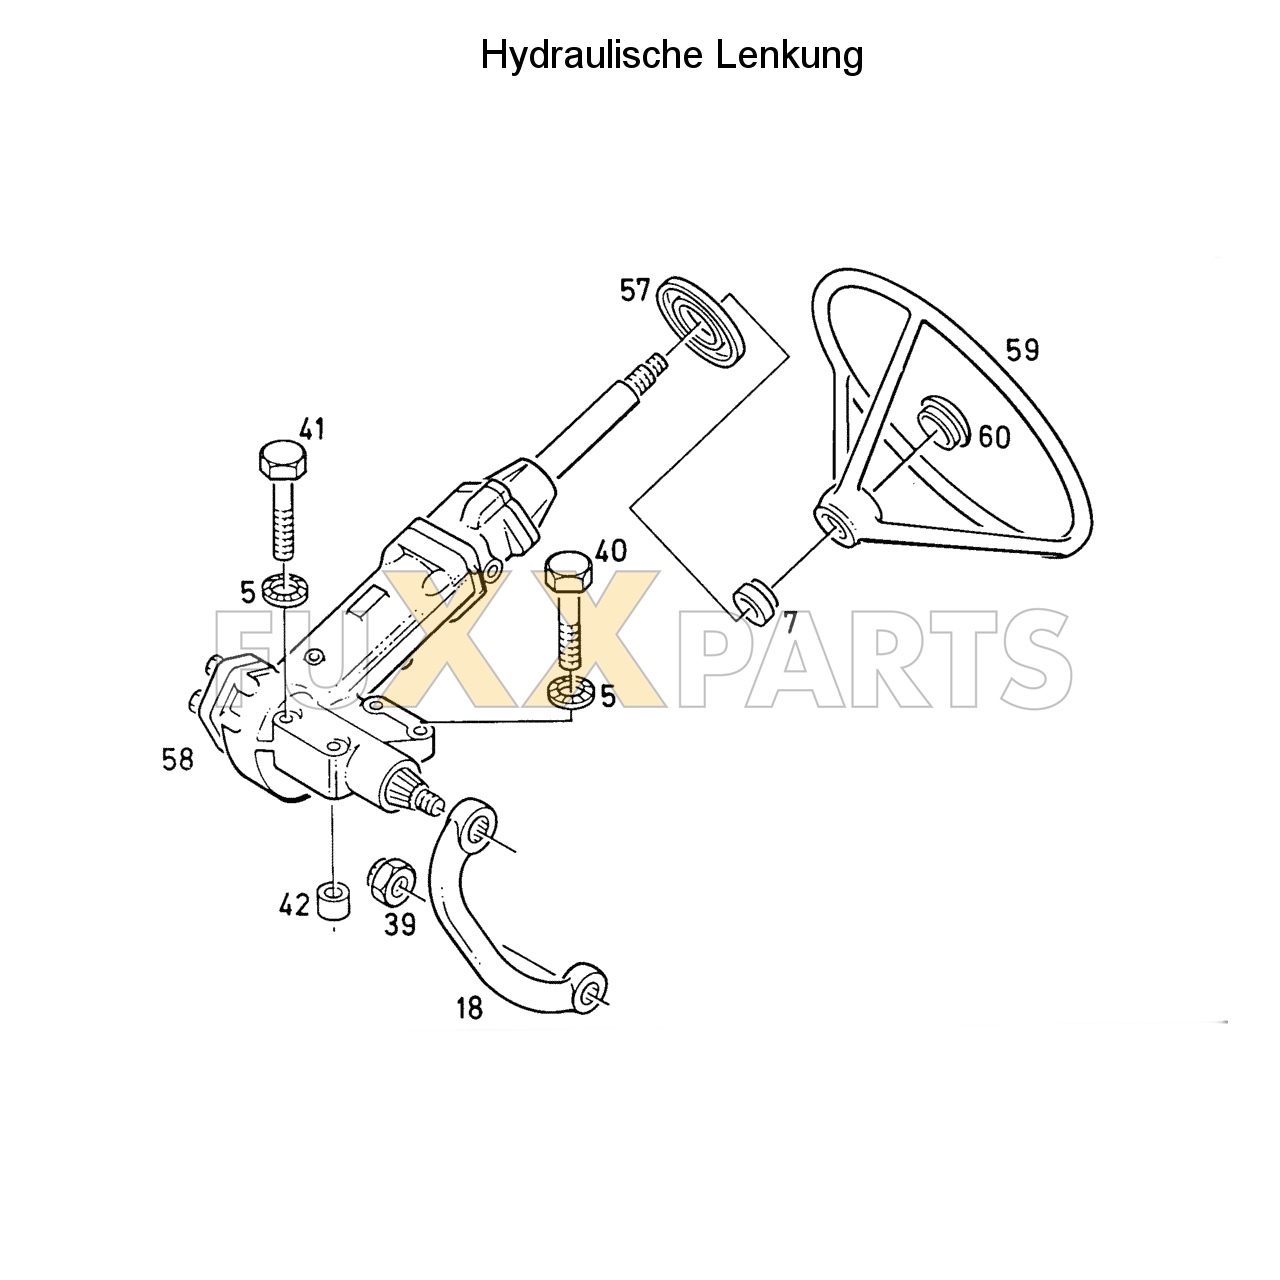 D 5207 Hydraulische Lenkung